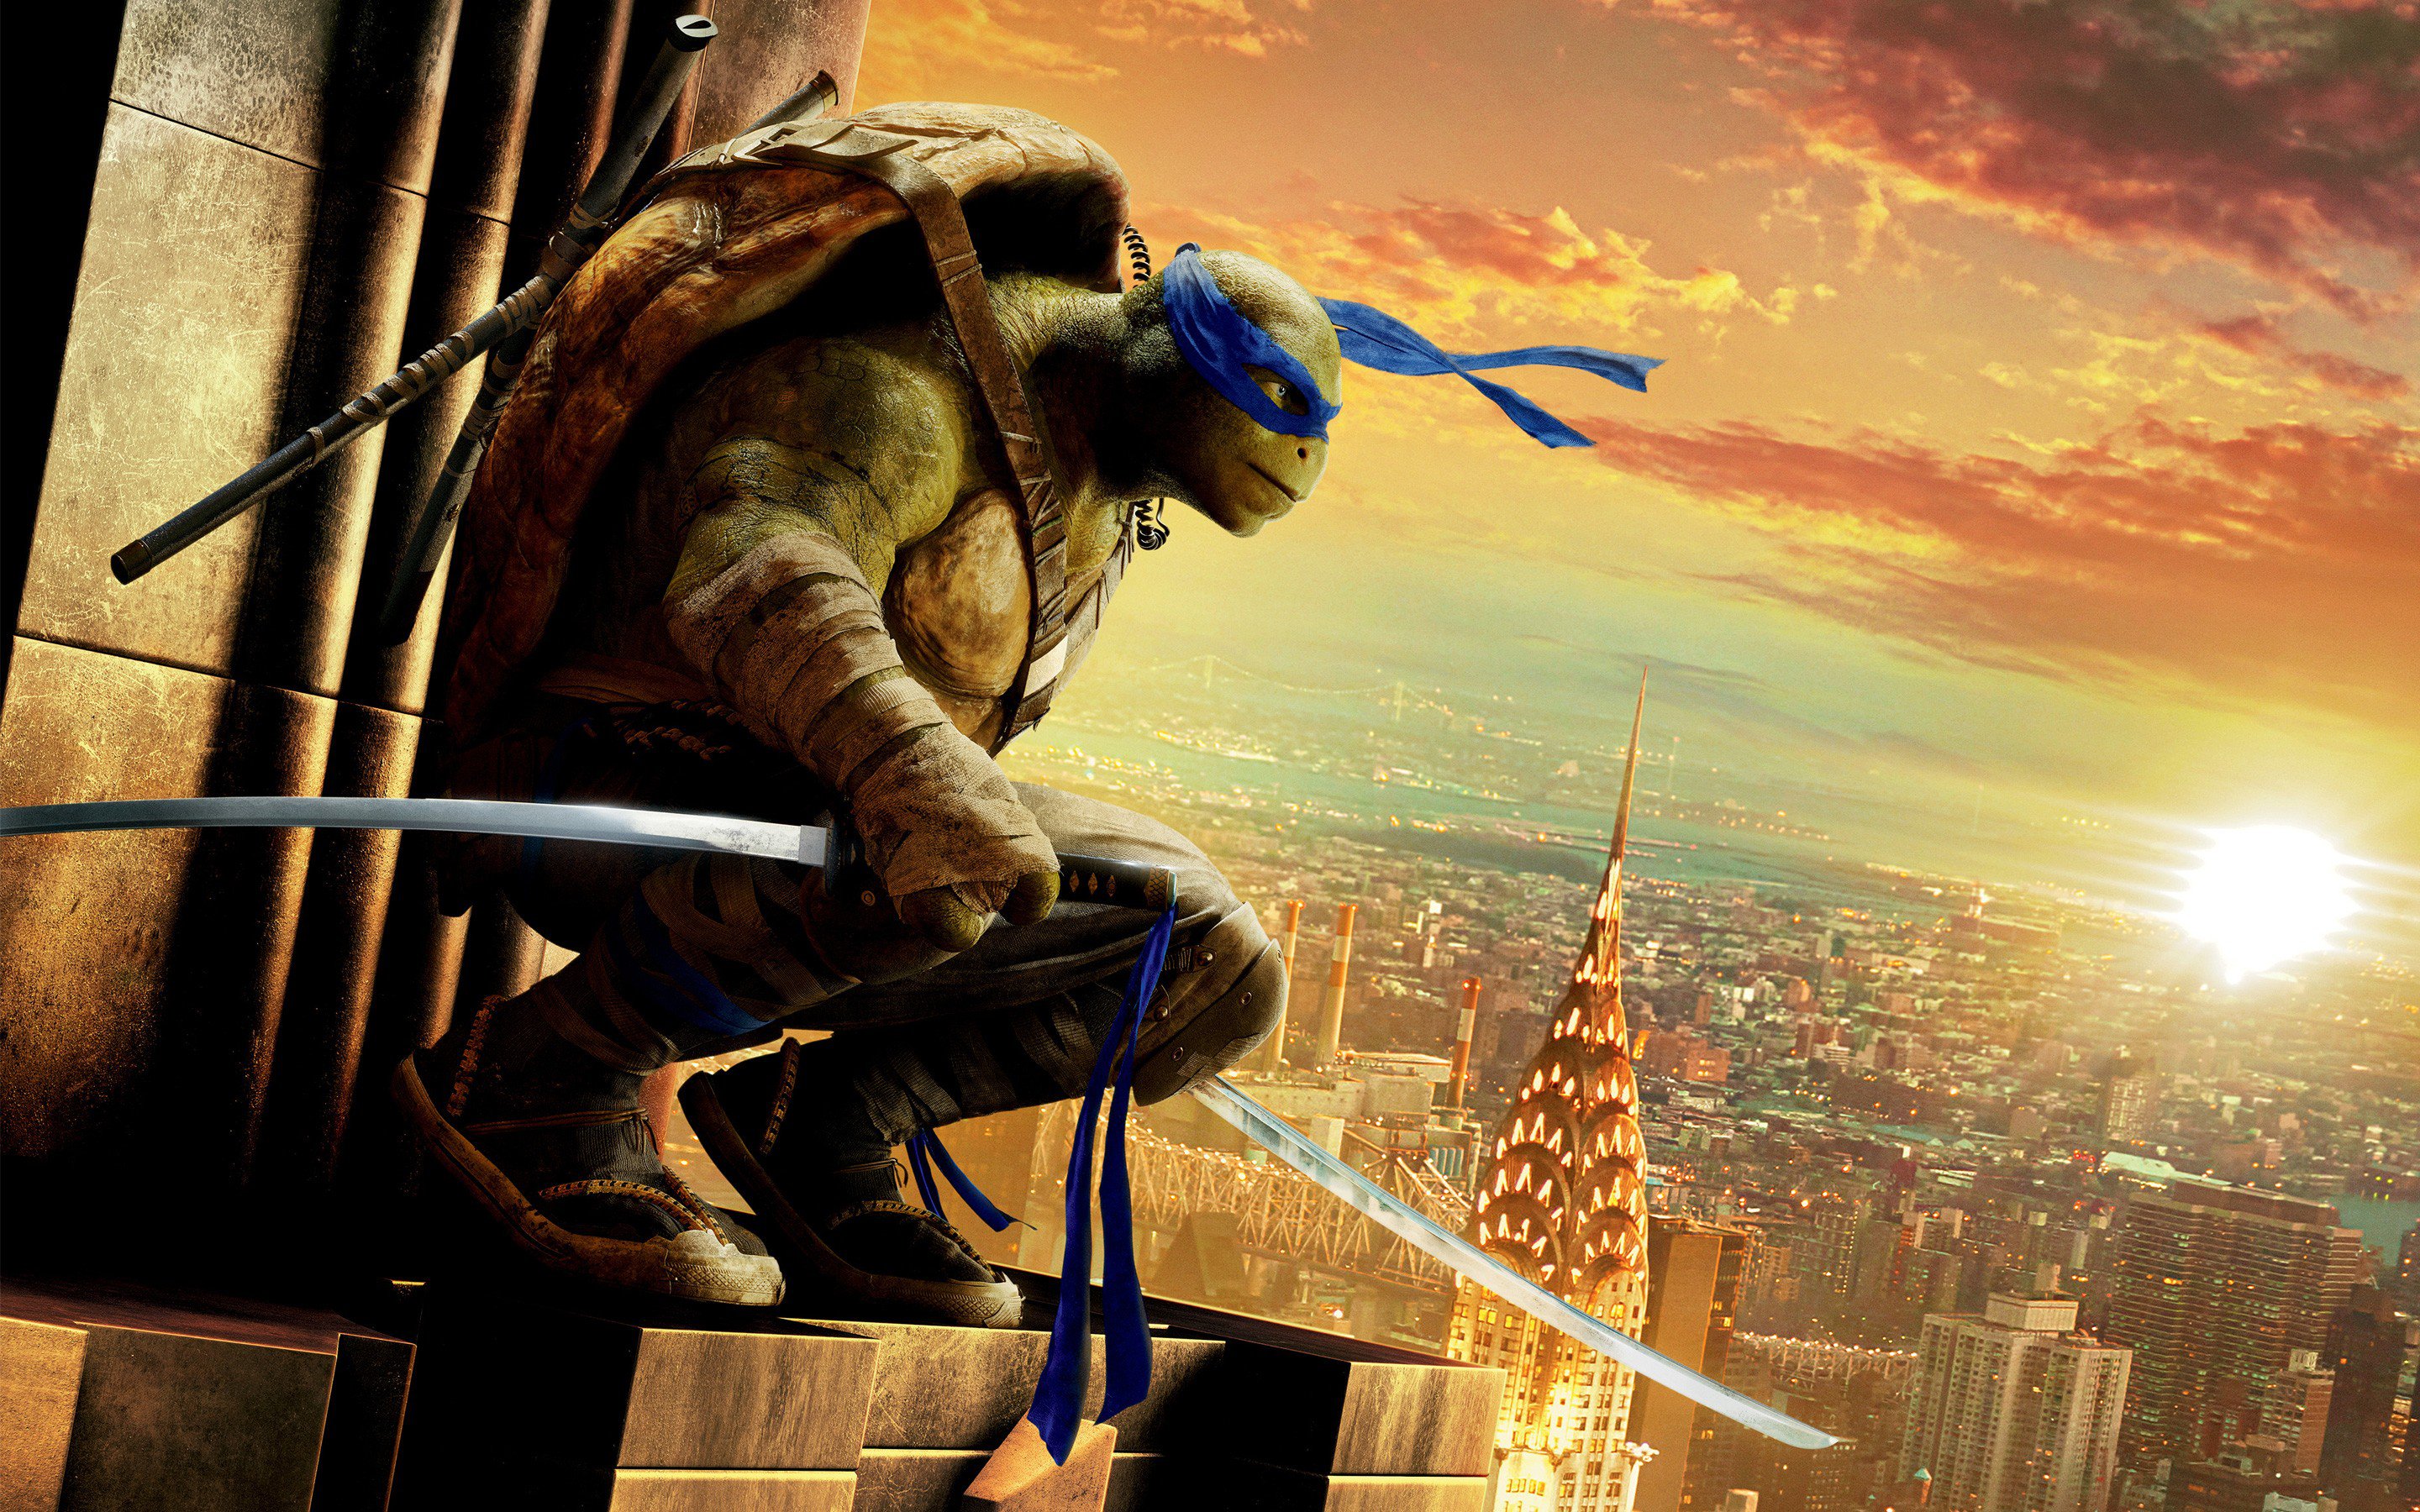 I nuovi film animati delle Tartarughe Ninja arriveranno su Paramount+ -  Tom's Hardware